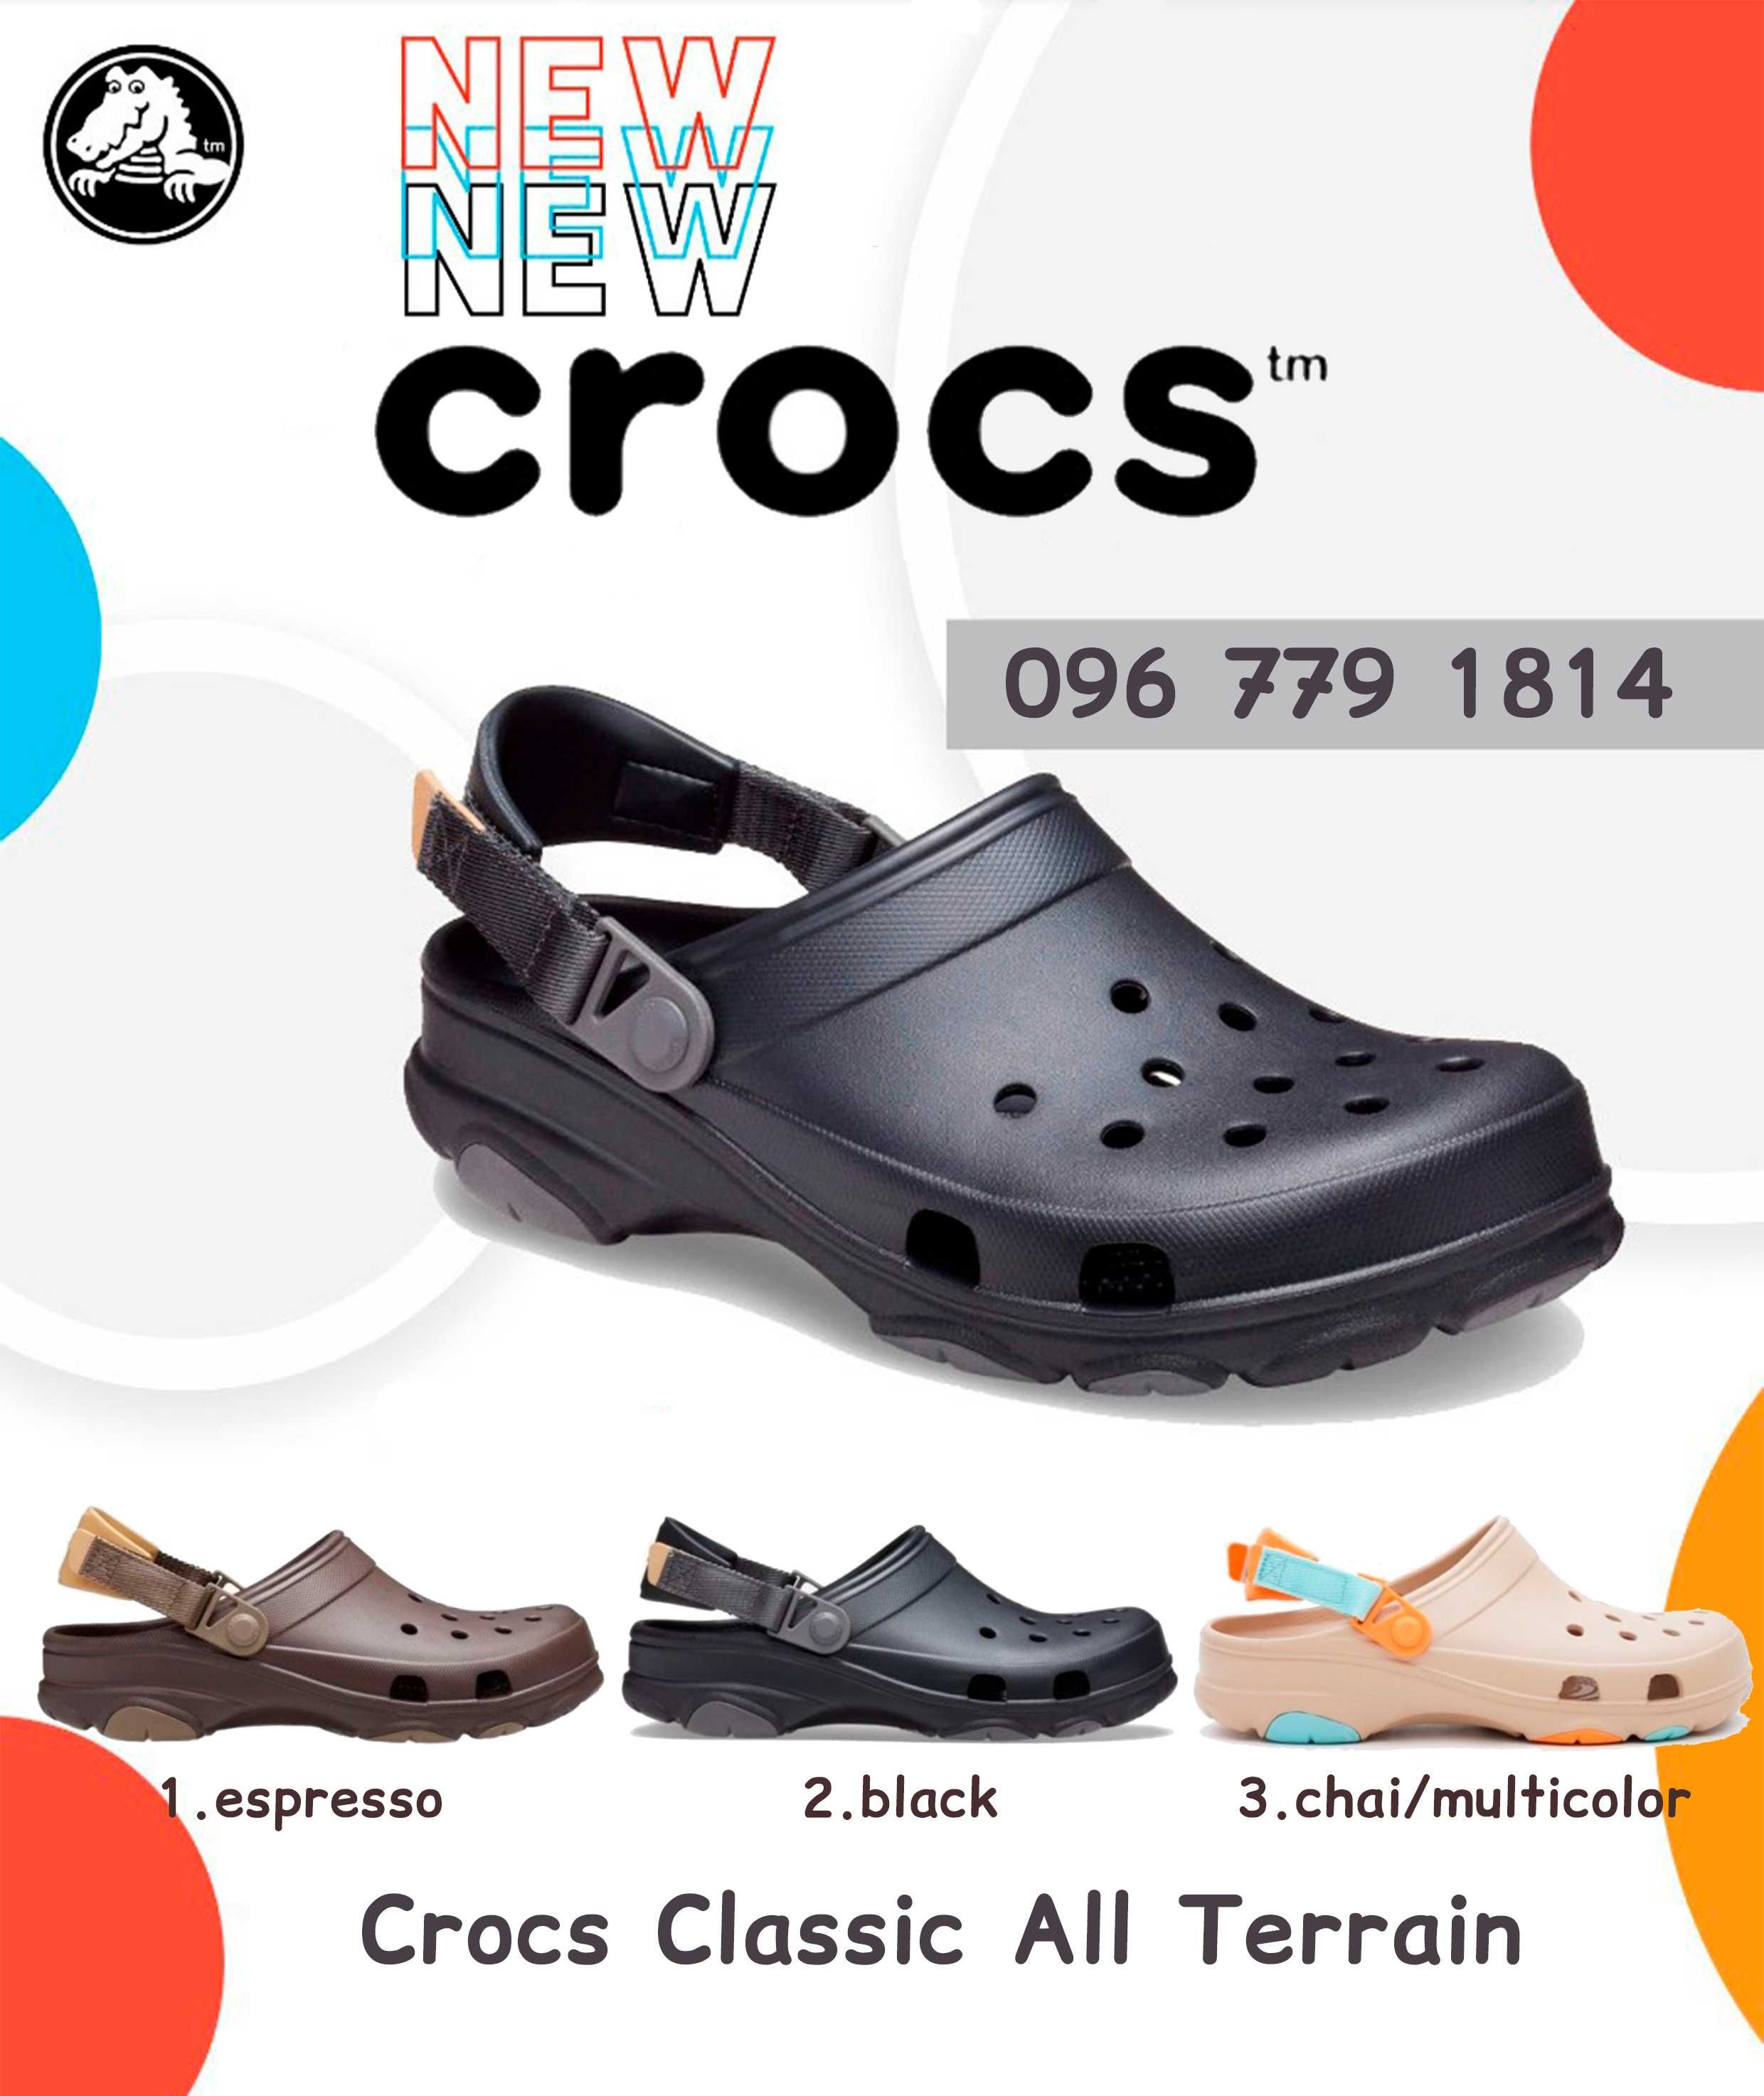 Новинка! Crocs Classic All Terrain Clog. Мужские кроксы в 3 расцветках